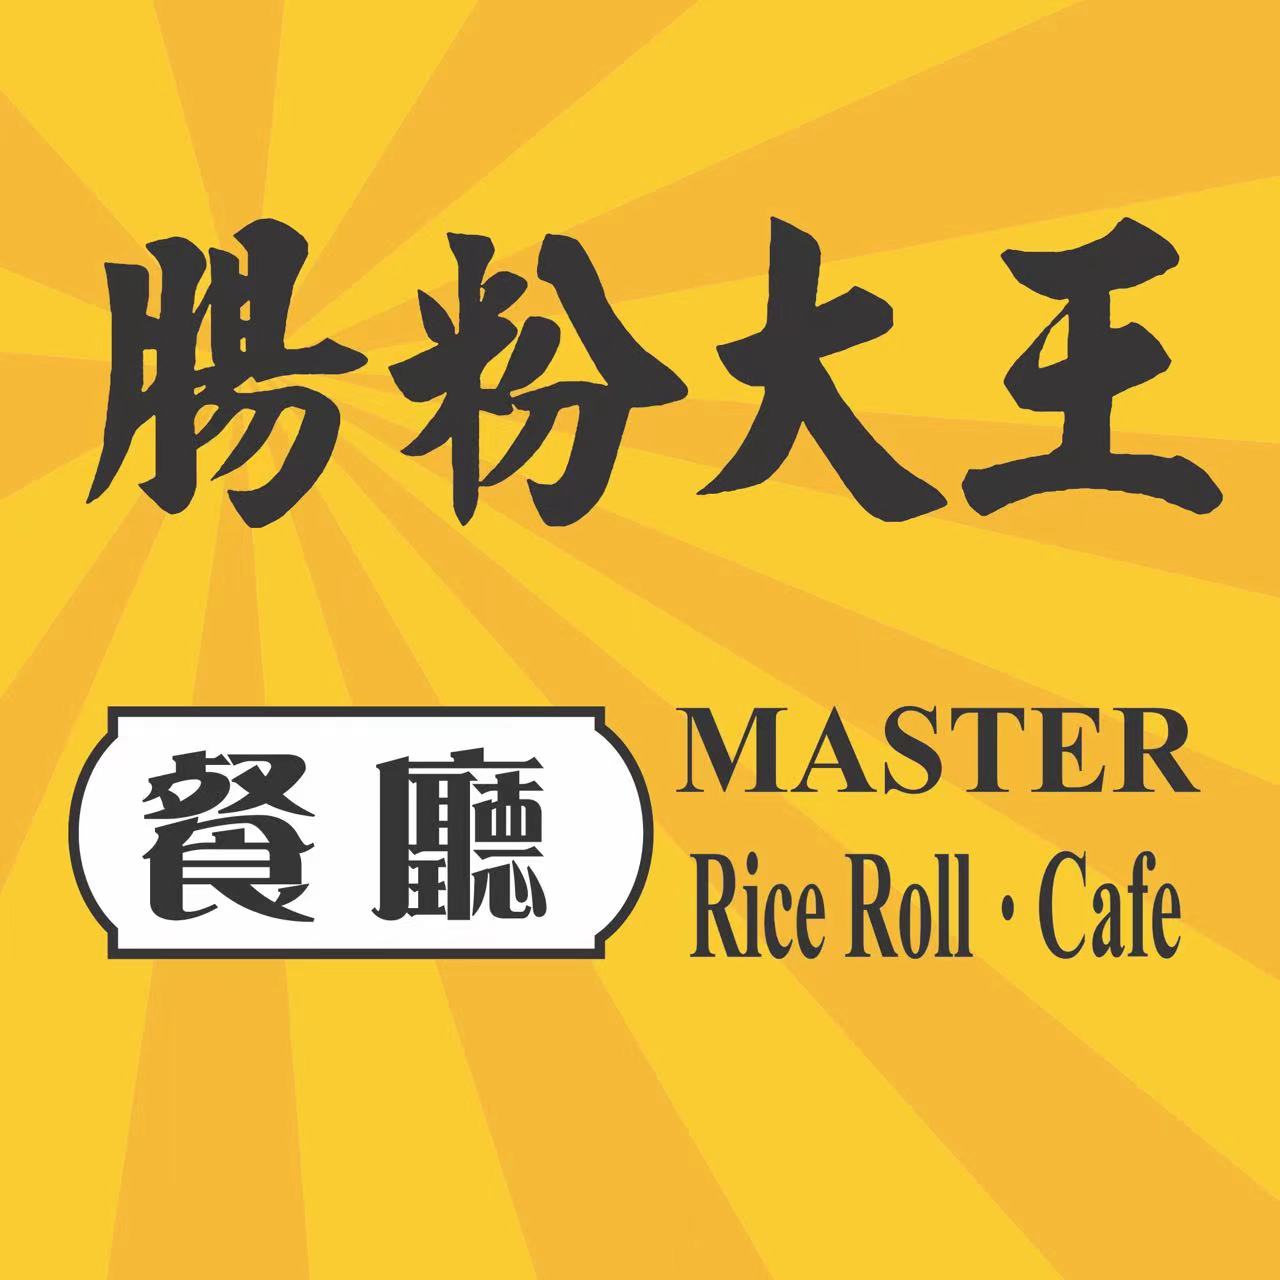 Master Rice Roll|7782979709|4200 No.3 Road Richmond, BC V6X 2C2||EATOPIA